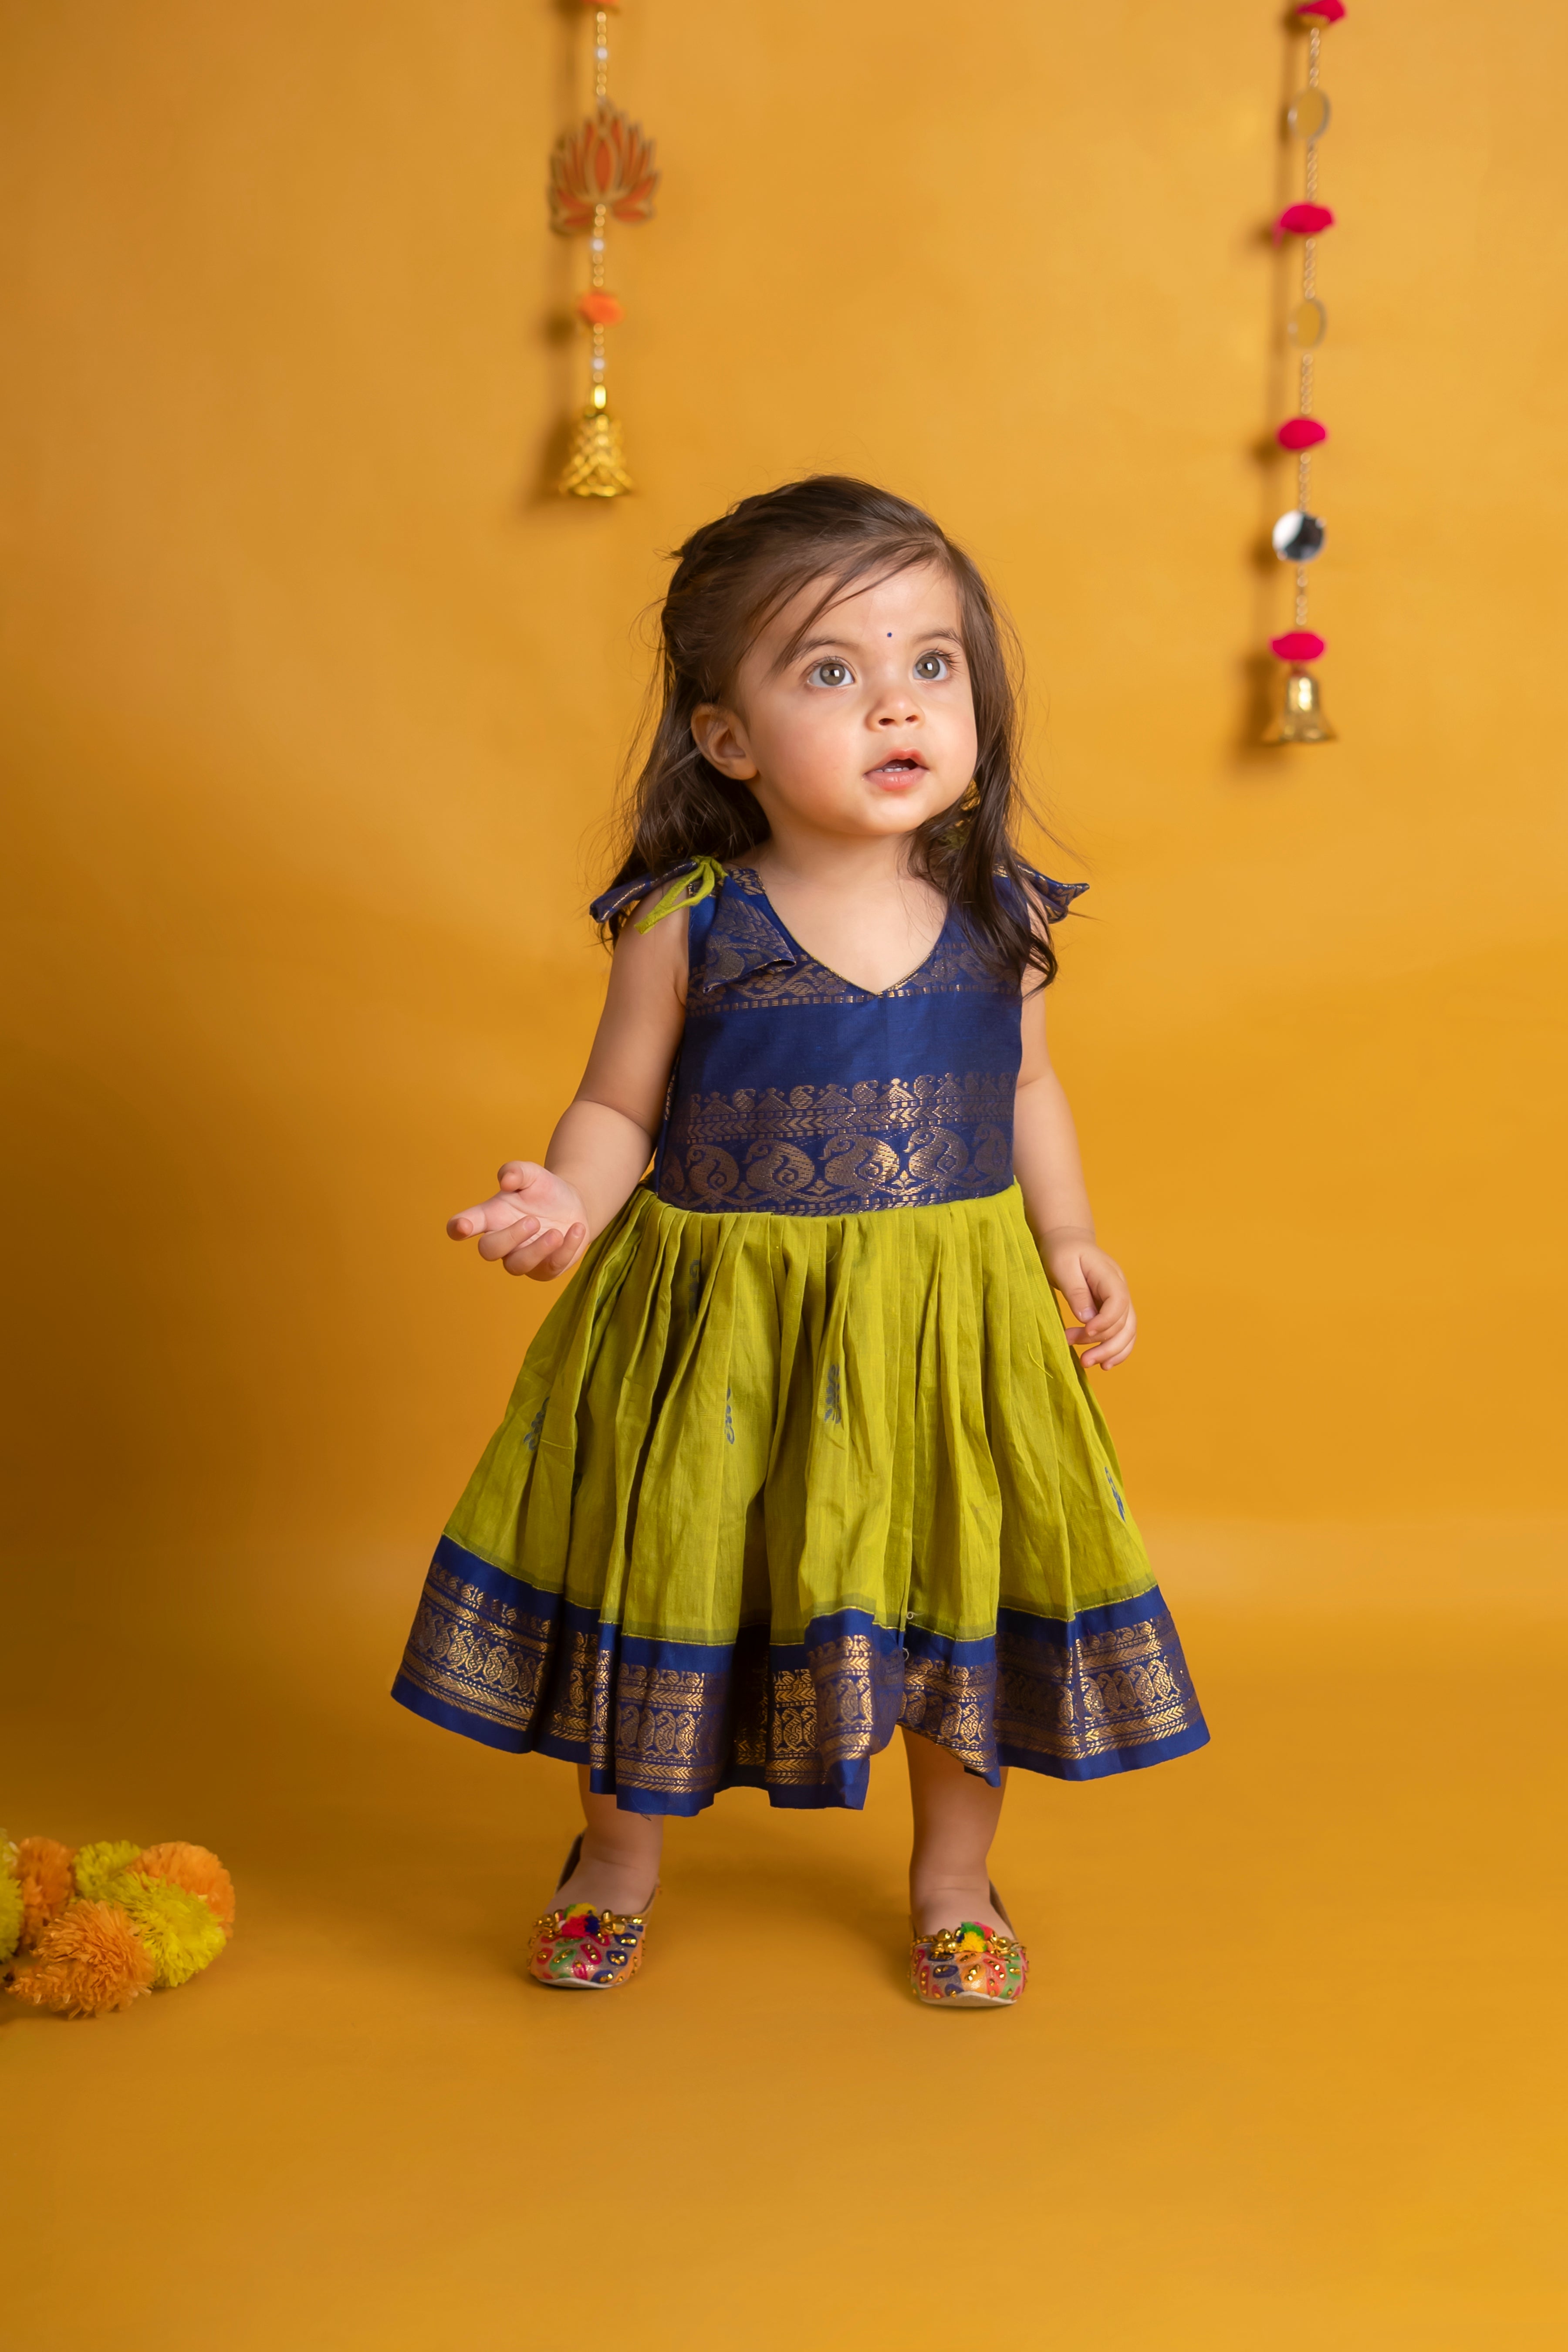 Infant and Toddler Clothing & Dresses - PinkPrincess.com